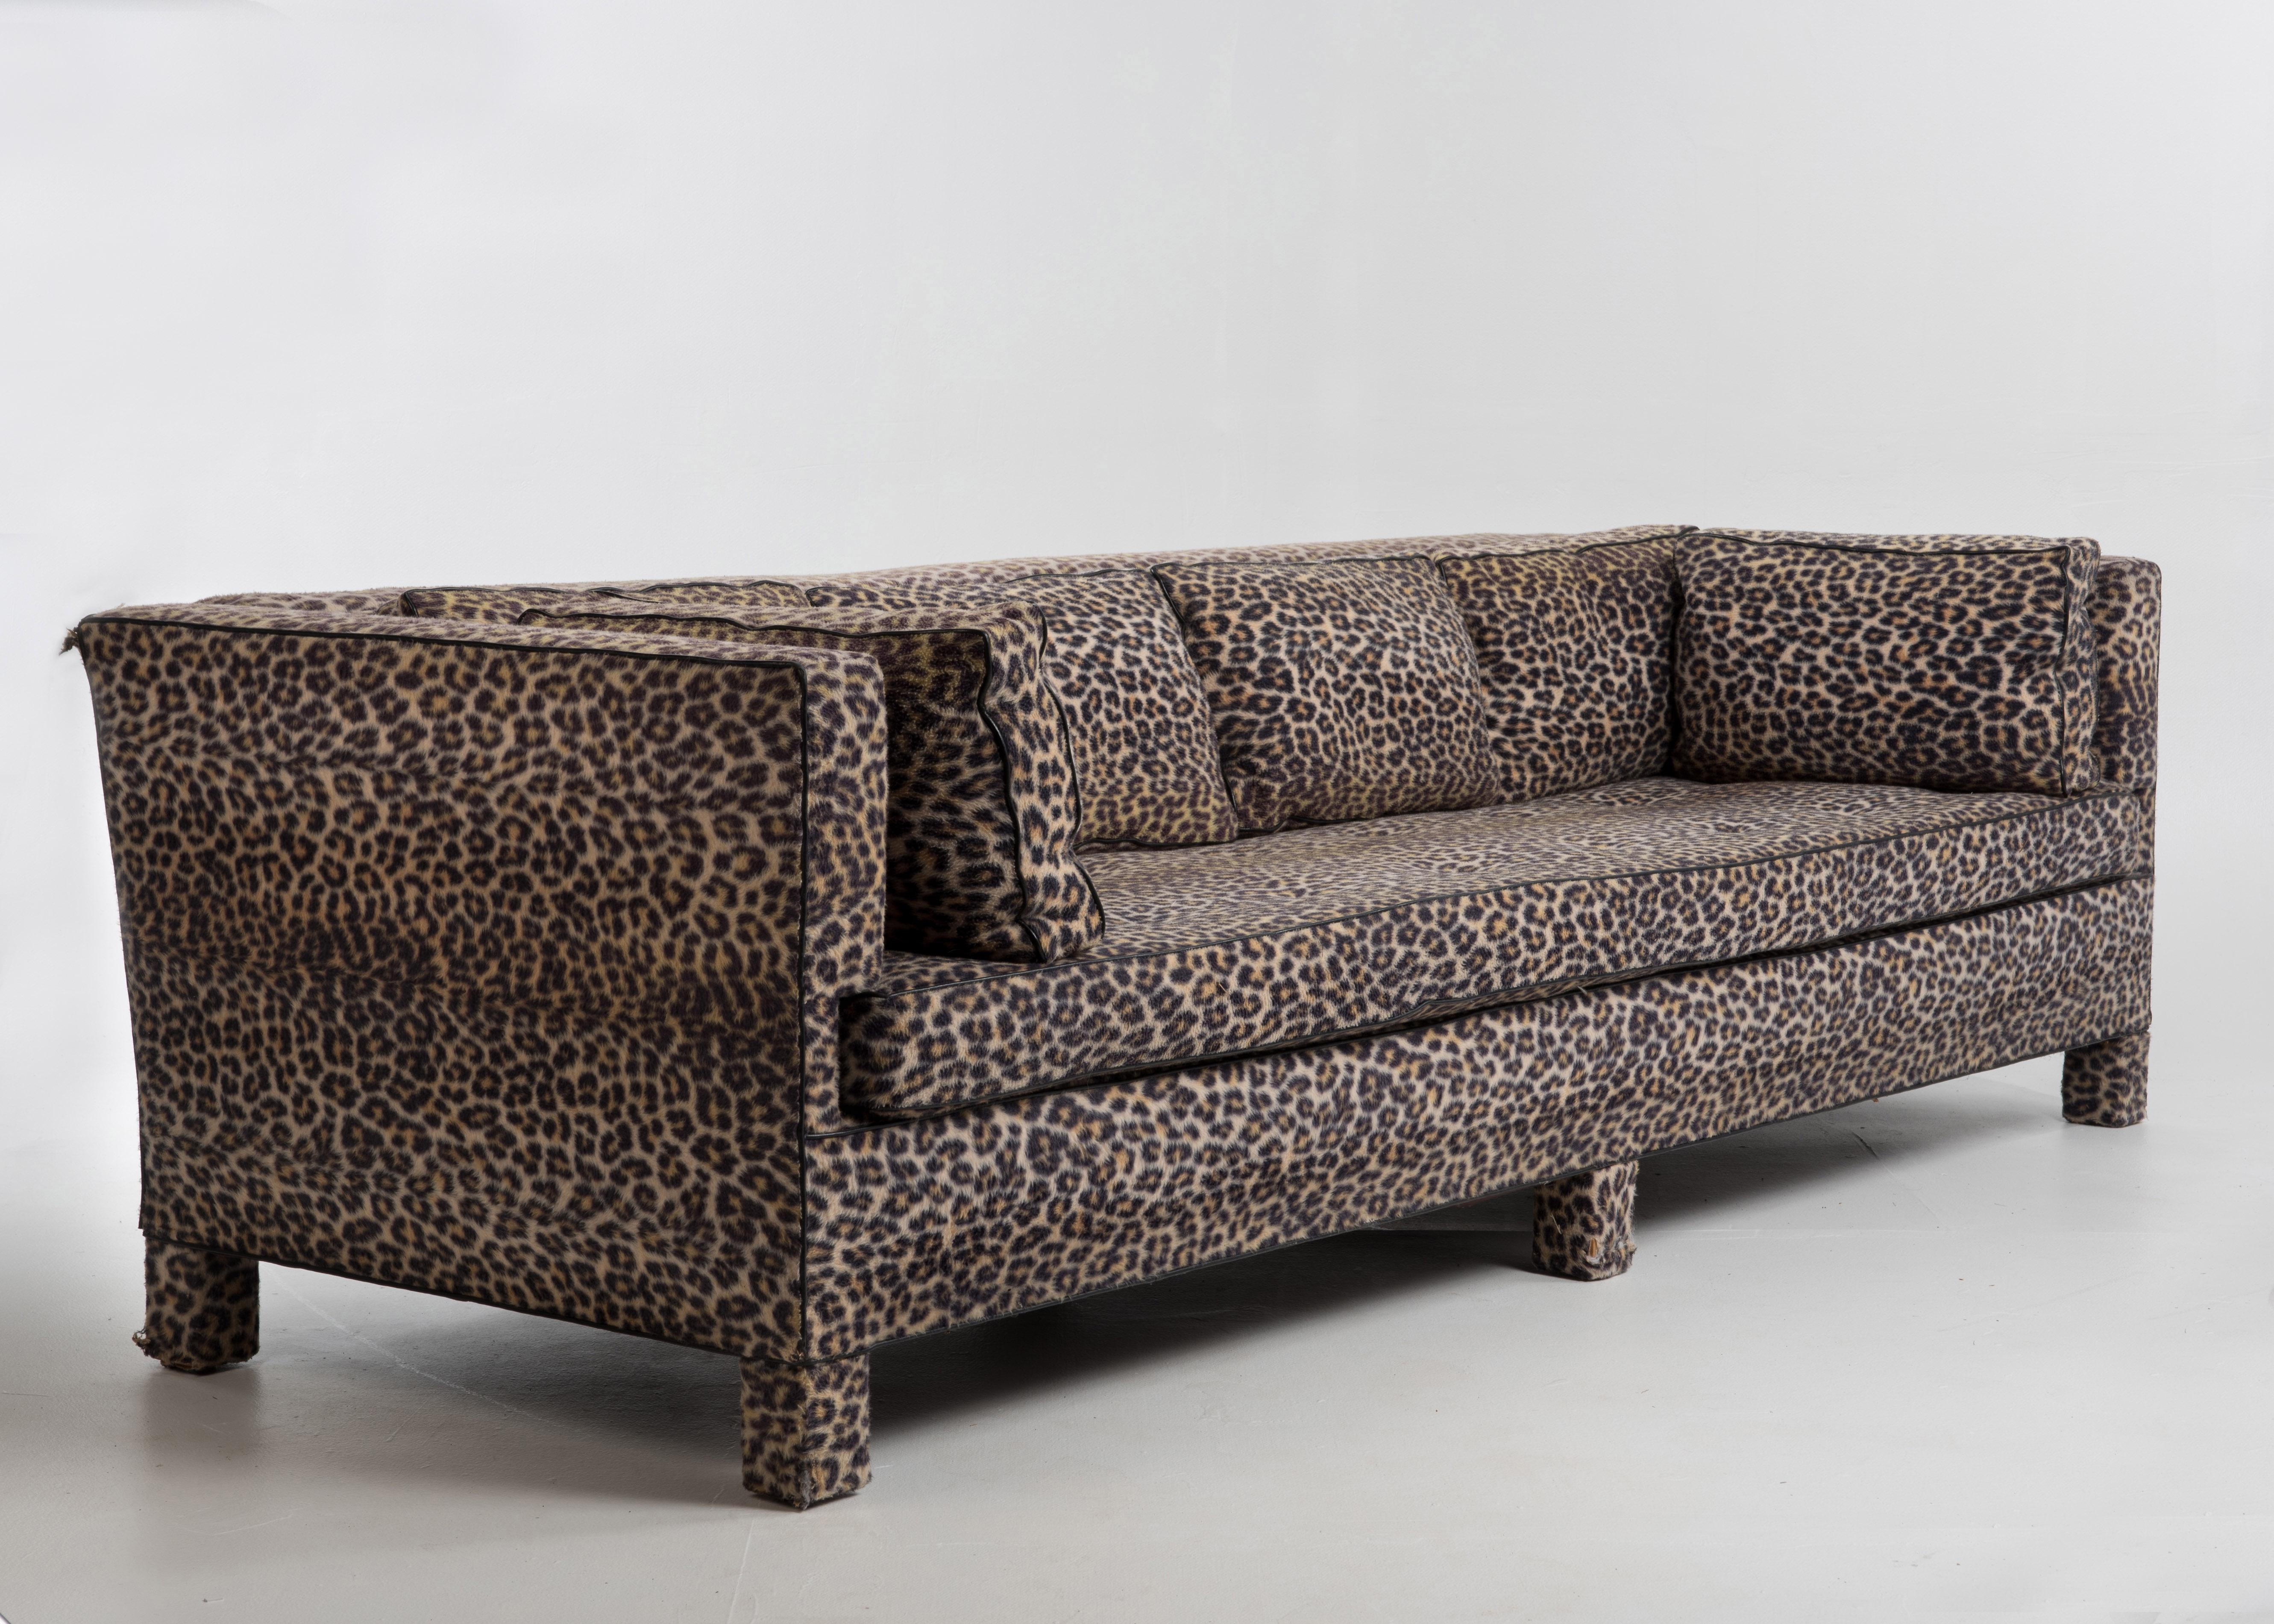 Upholstery Sleek Mid-Century Modern Moviestar Sofa by Billy Baldwin